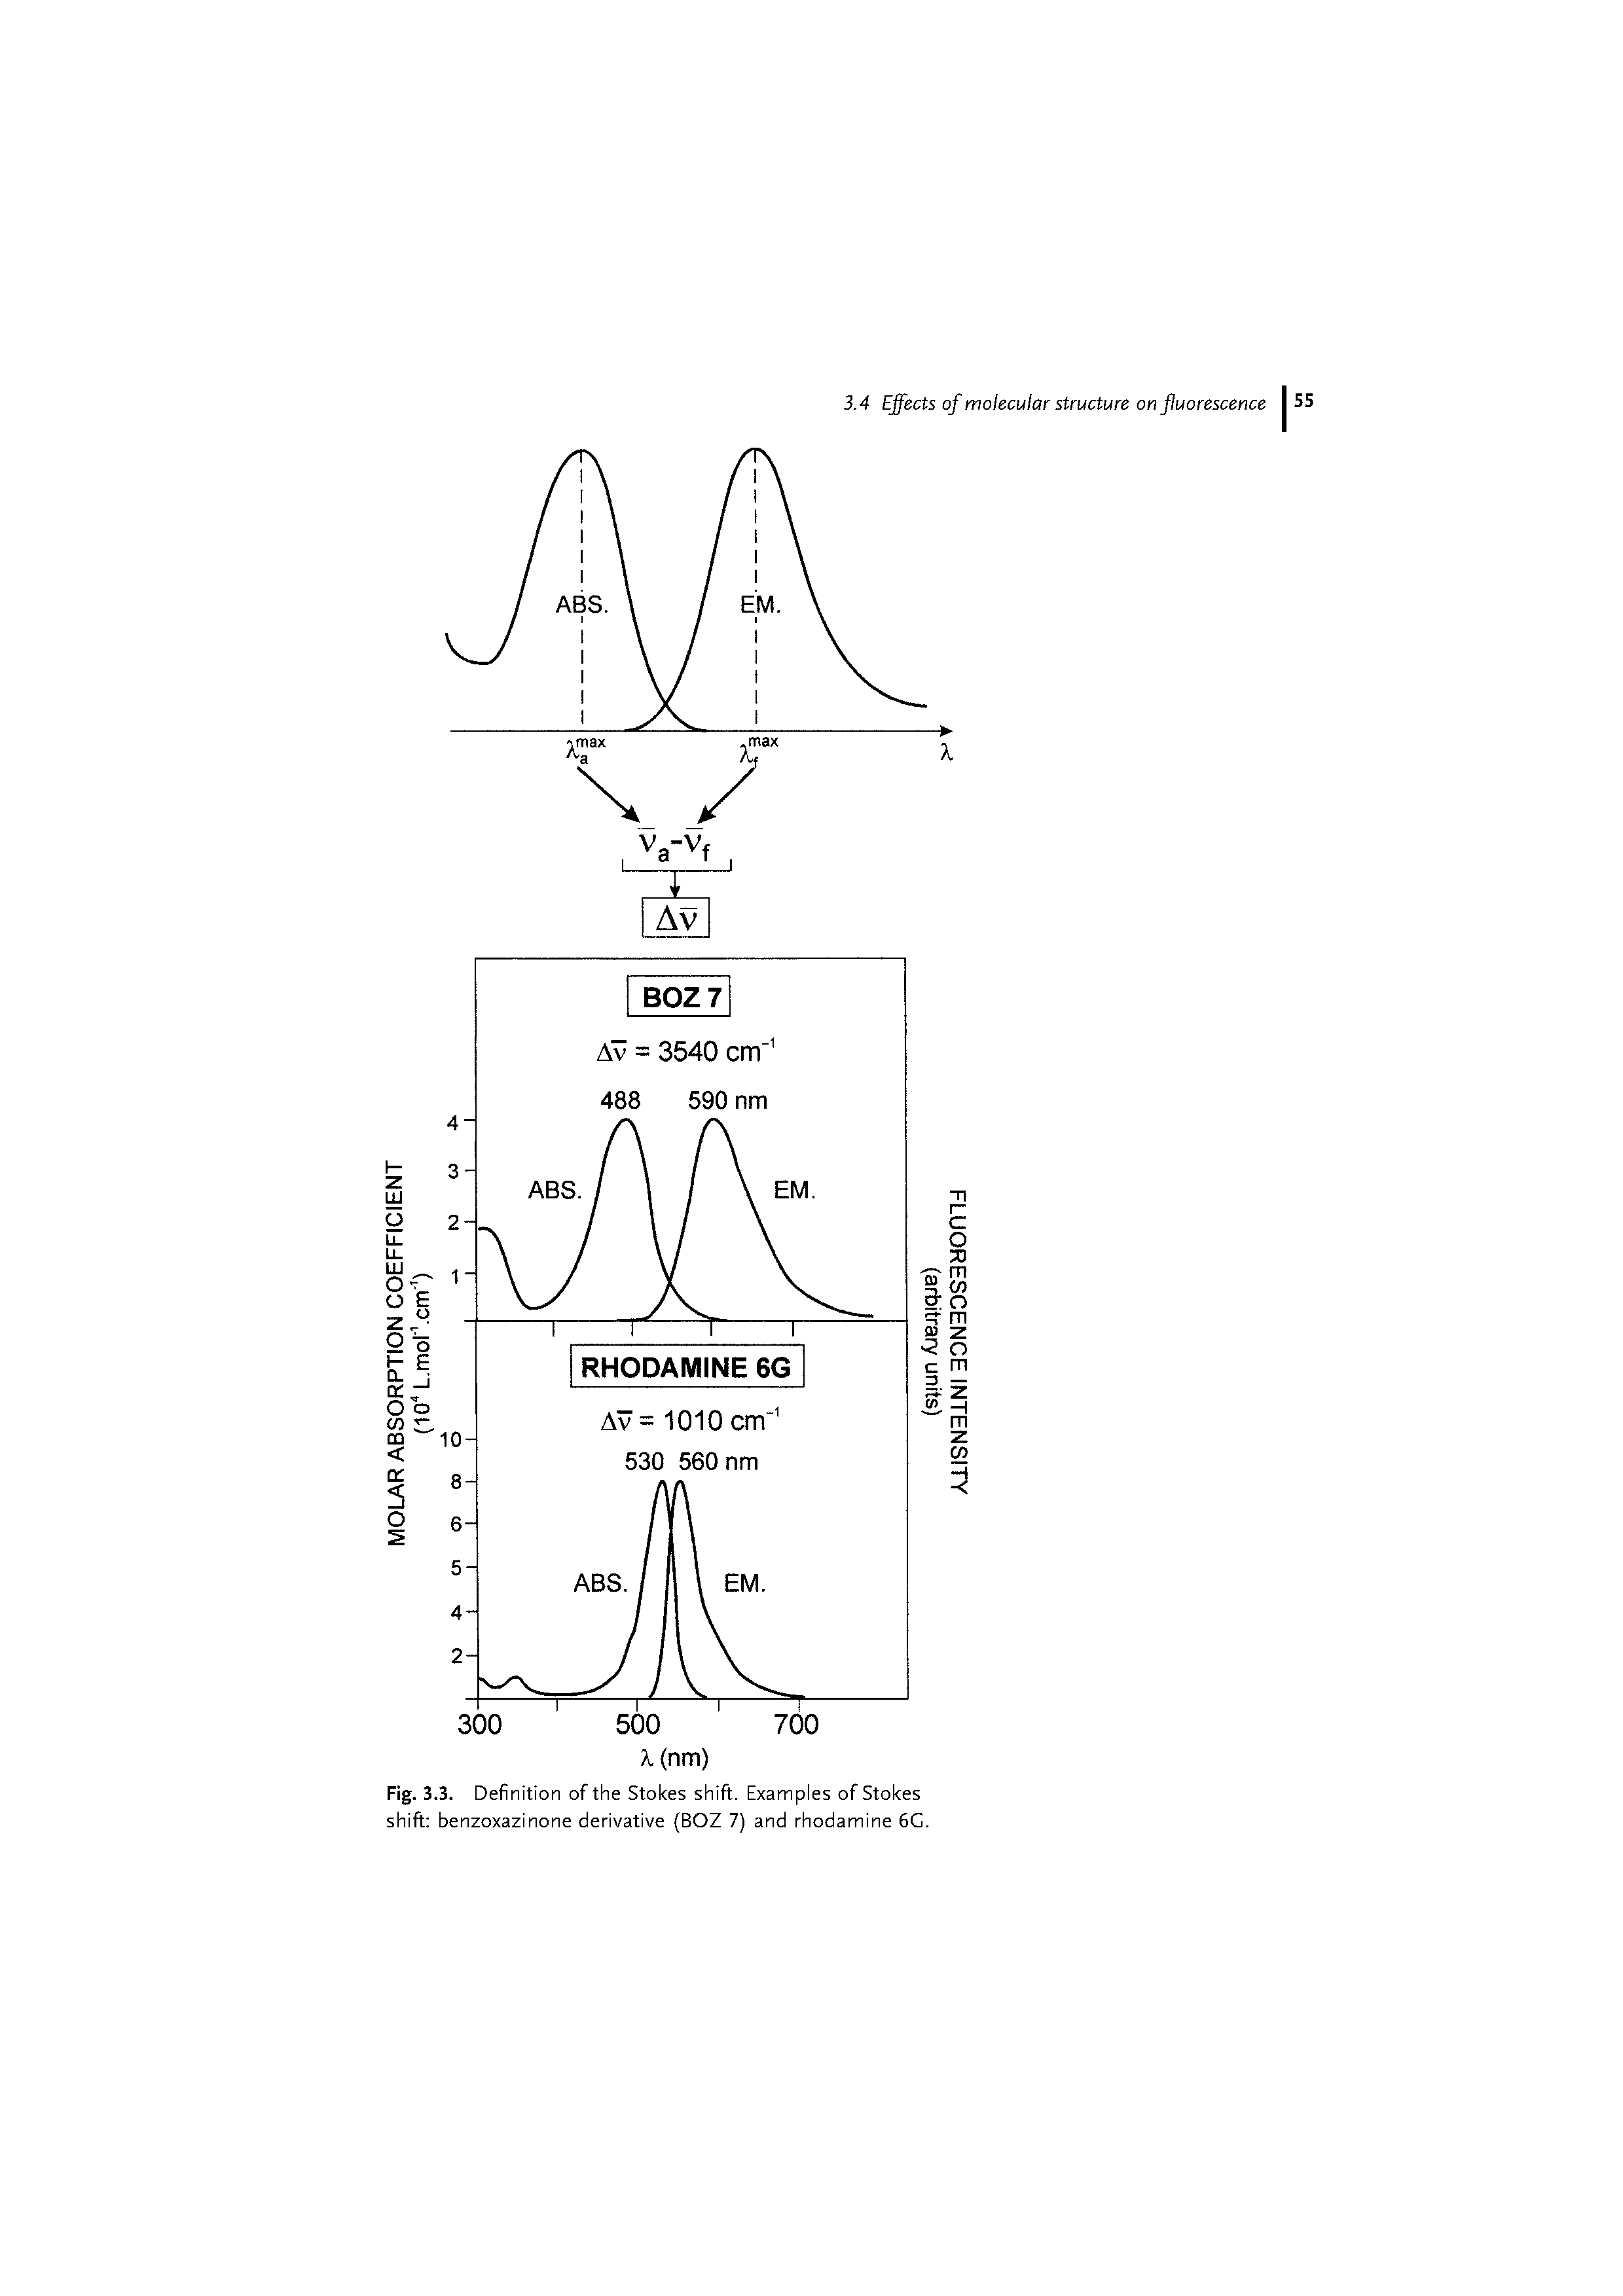 Fig. 3.3. Definition of the Stokes shift. Examples of Stokes shift benzoxazinone derivative (BOZ 7) and rhodamine 6G.